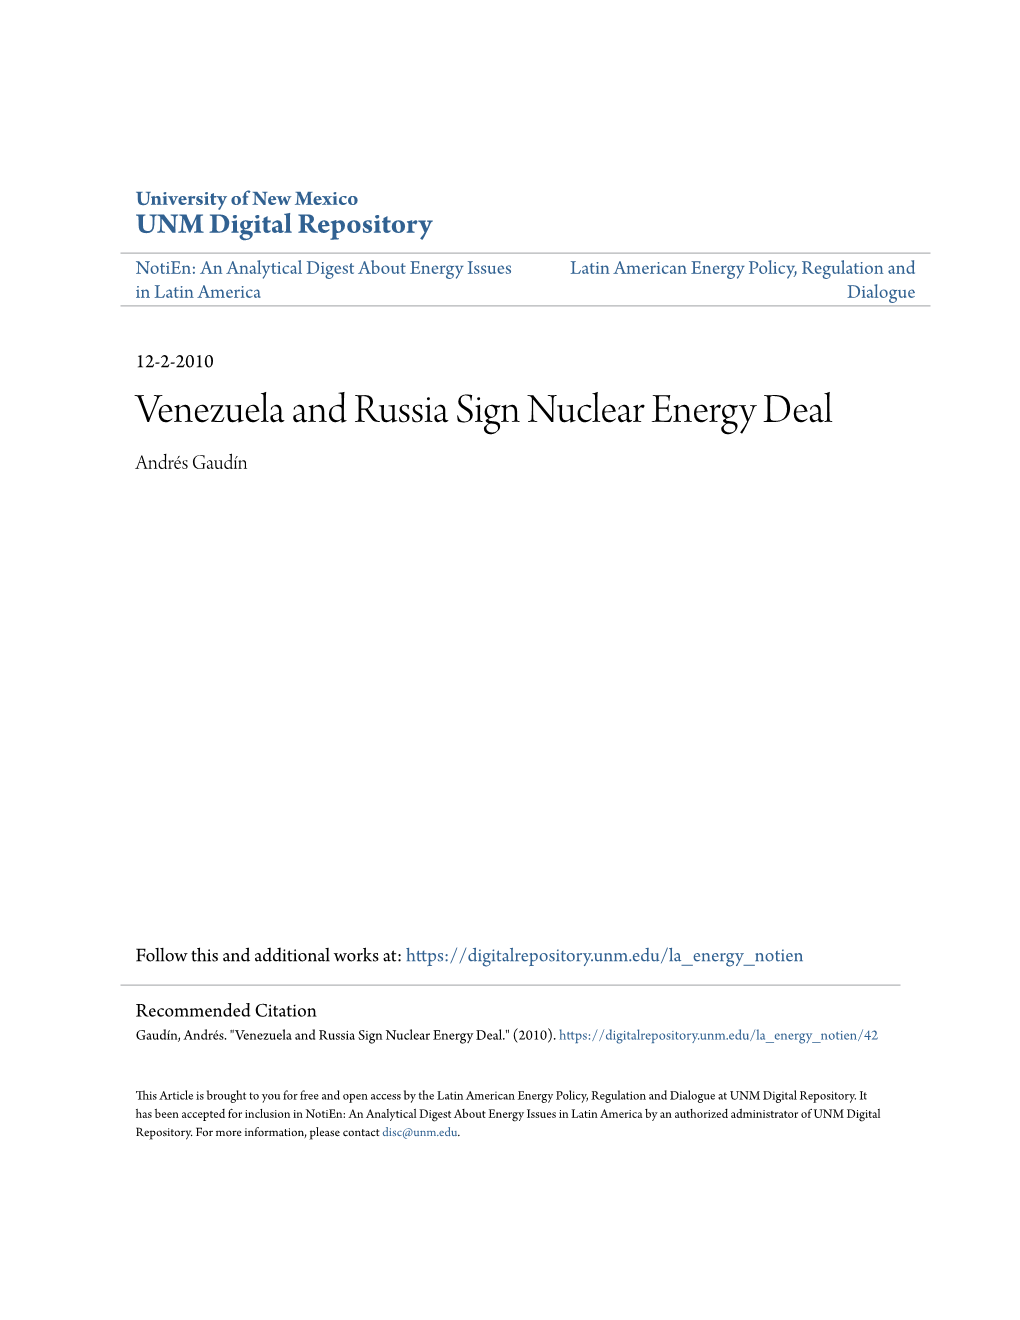 Venezuela and Russia Sign Nuclear Energy Deal Andrés Gaudín